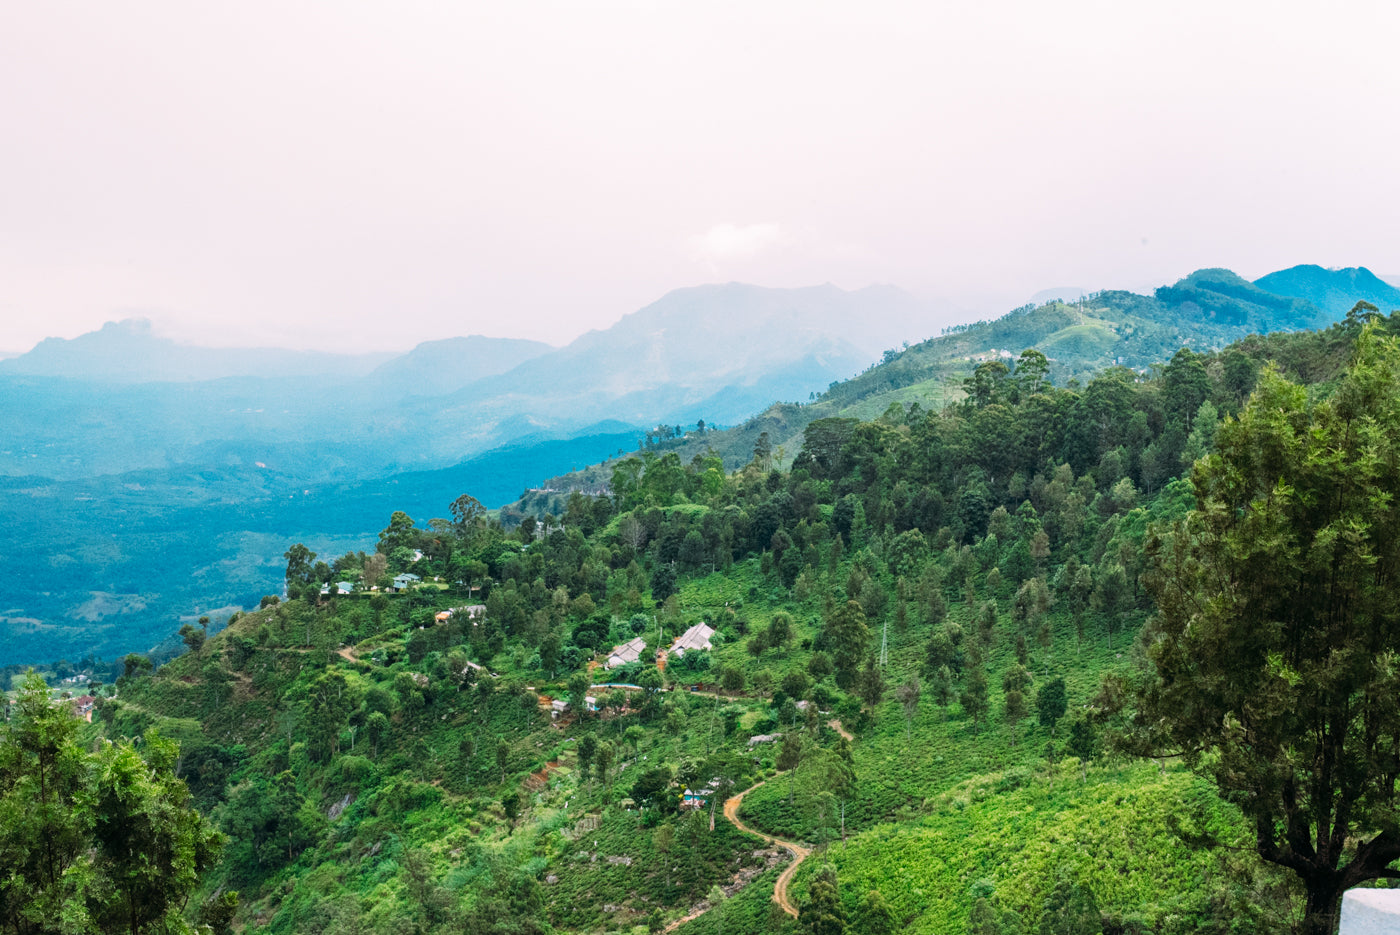 View over the highlands in Nuwara Eliya, Sri Lanka